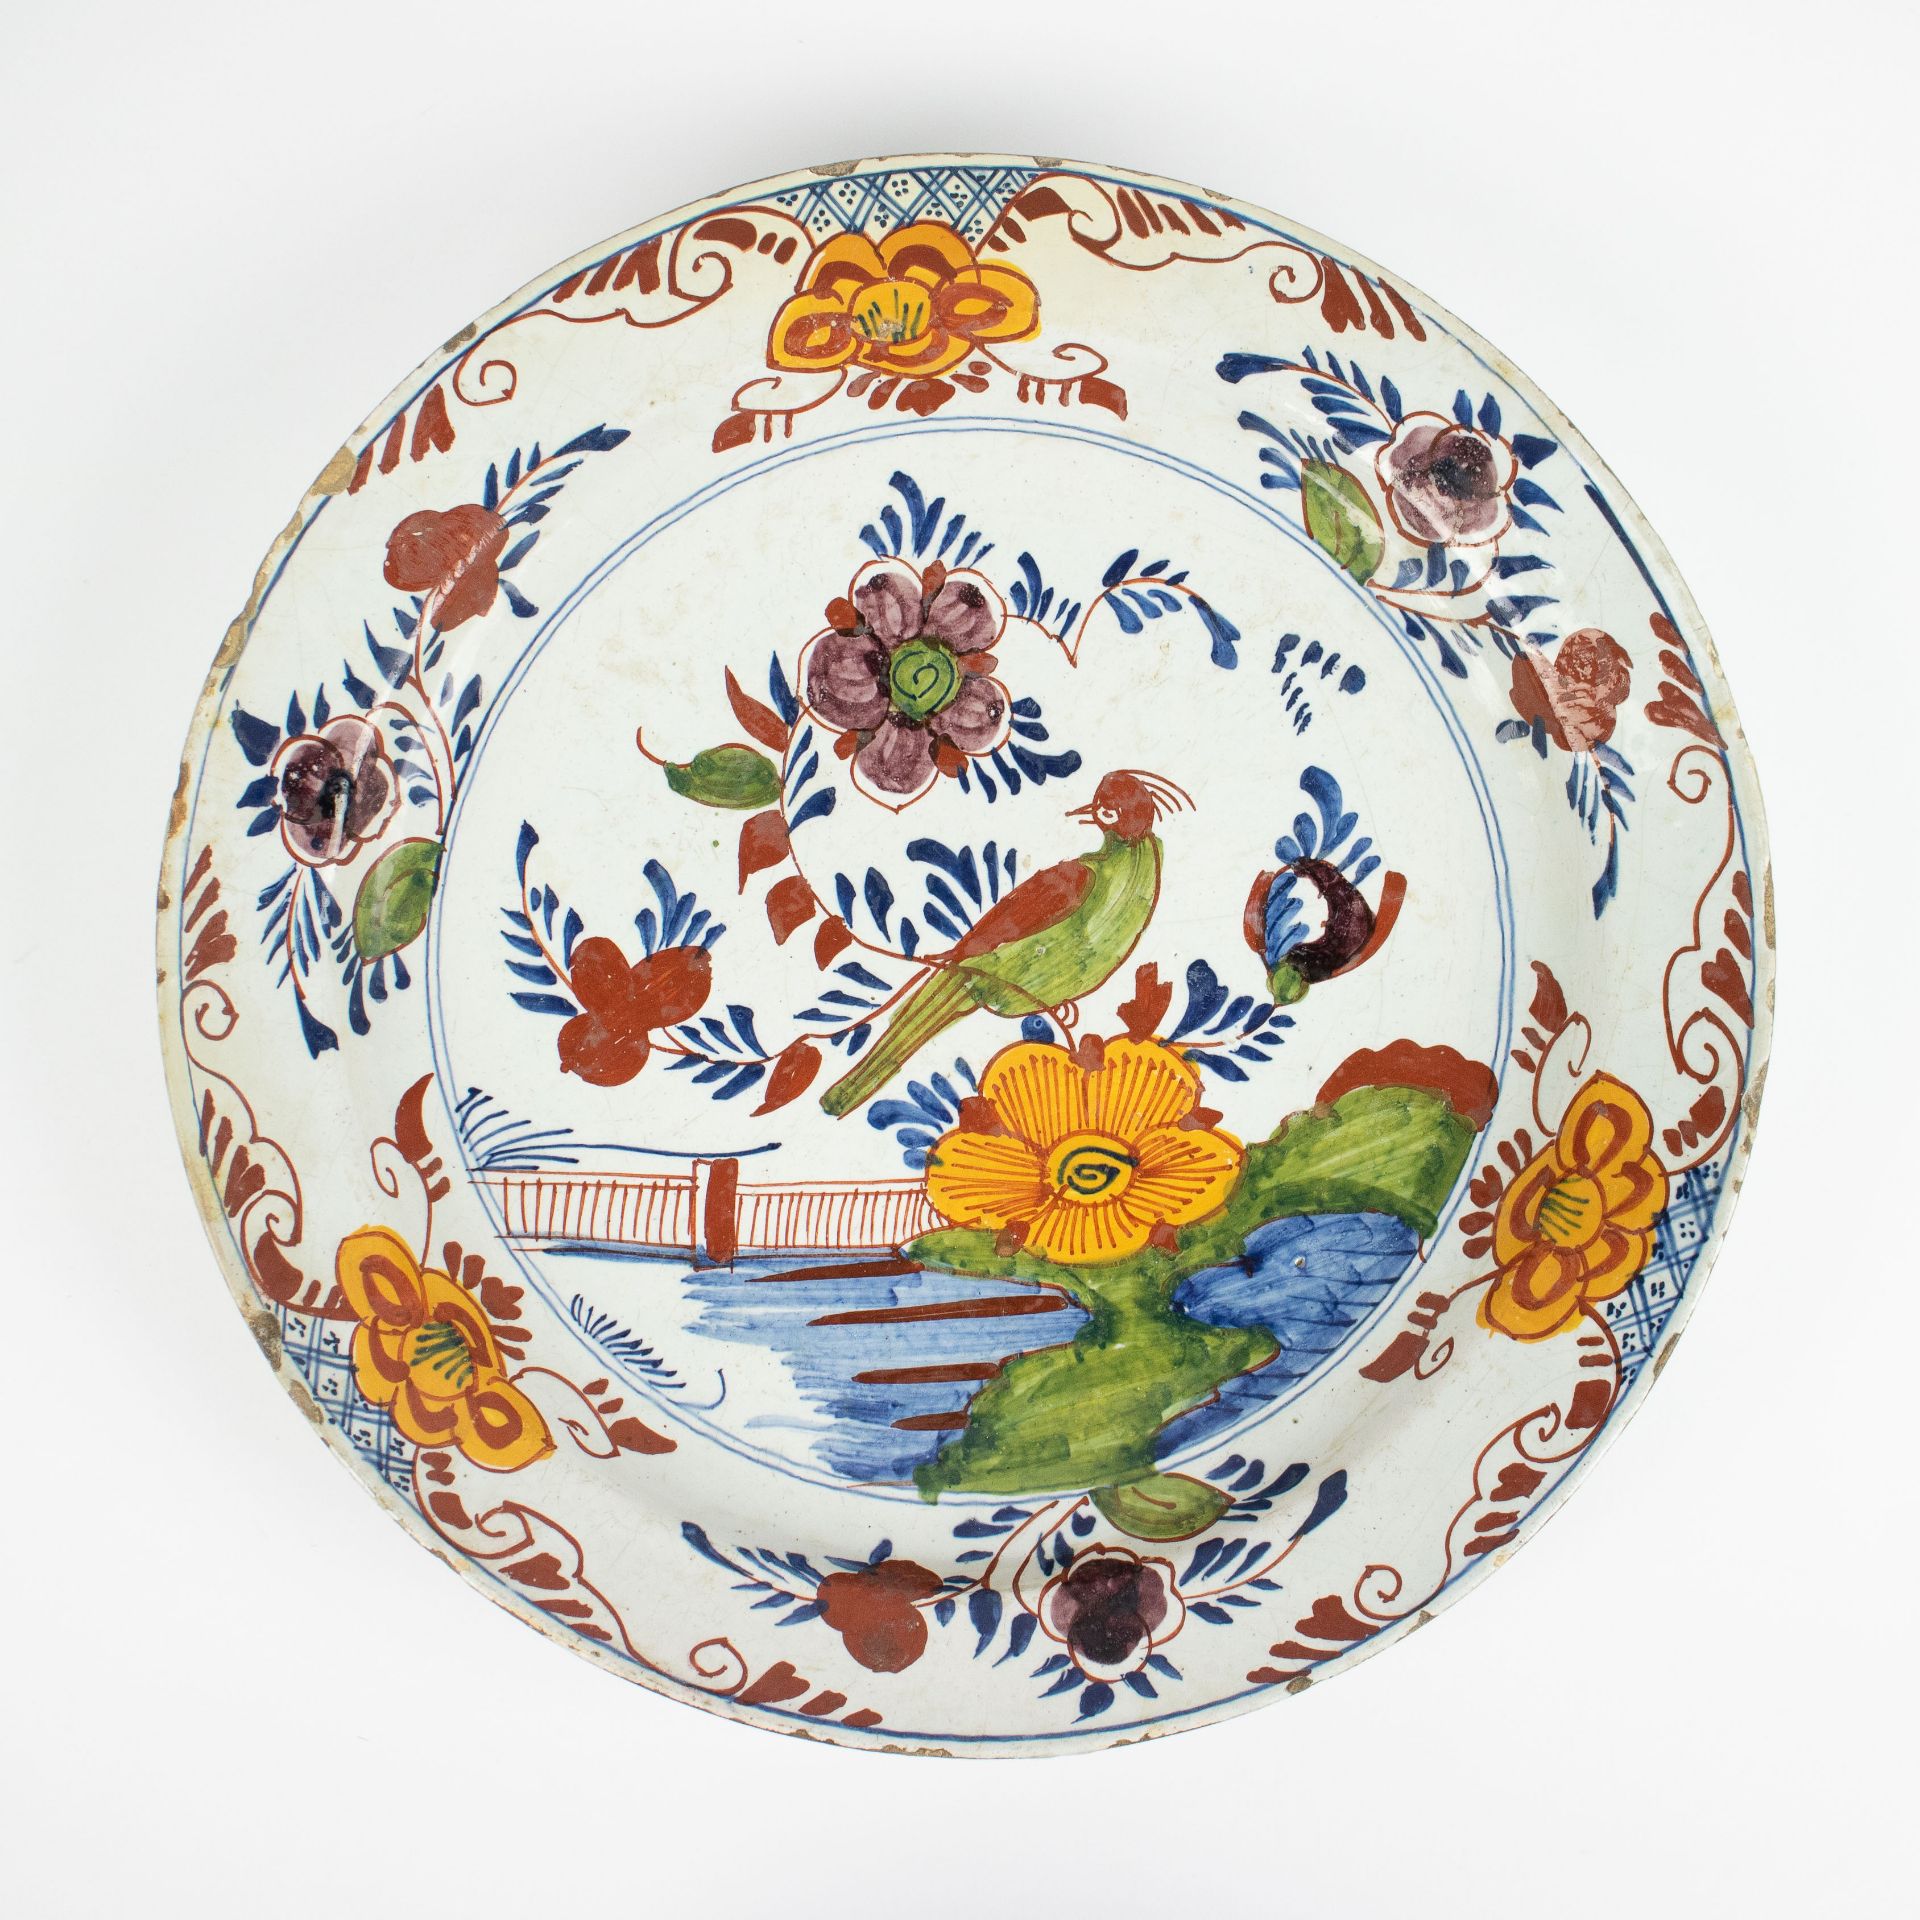 Delft polychrome plate 18th century